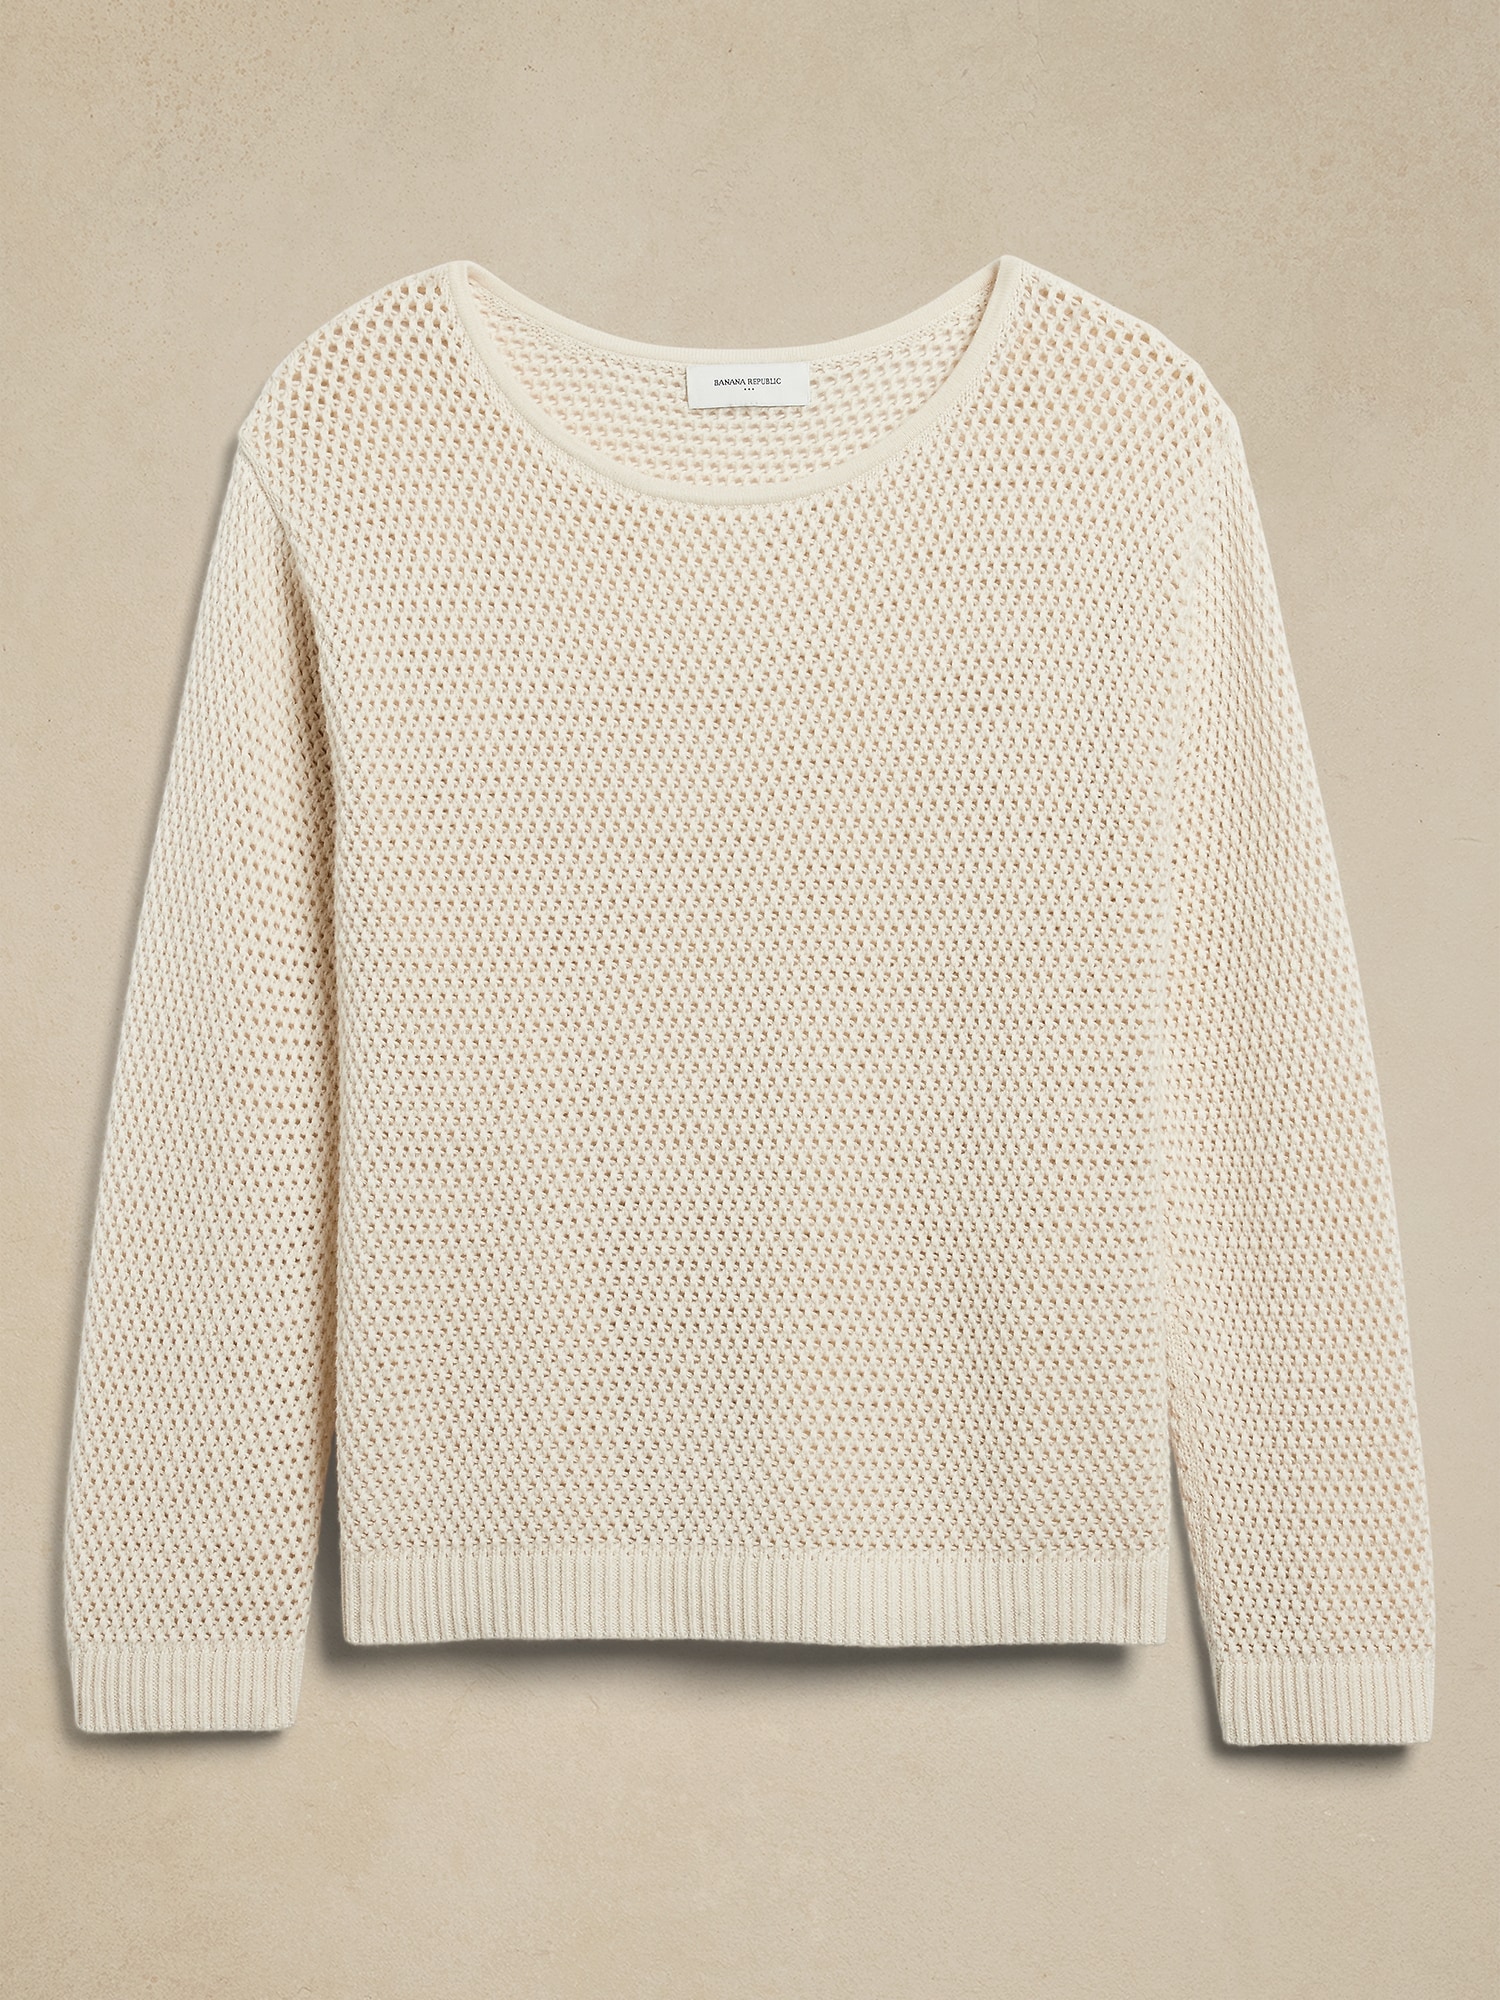 Open-Stitch Bell-Sleeve Sweater